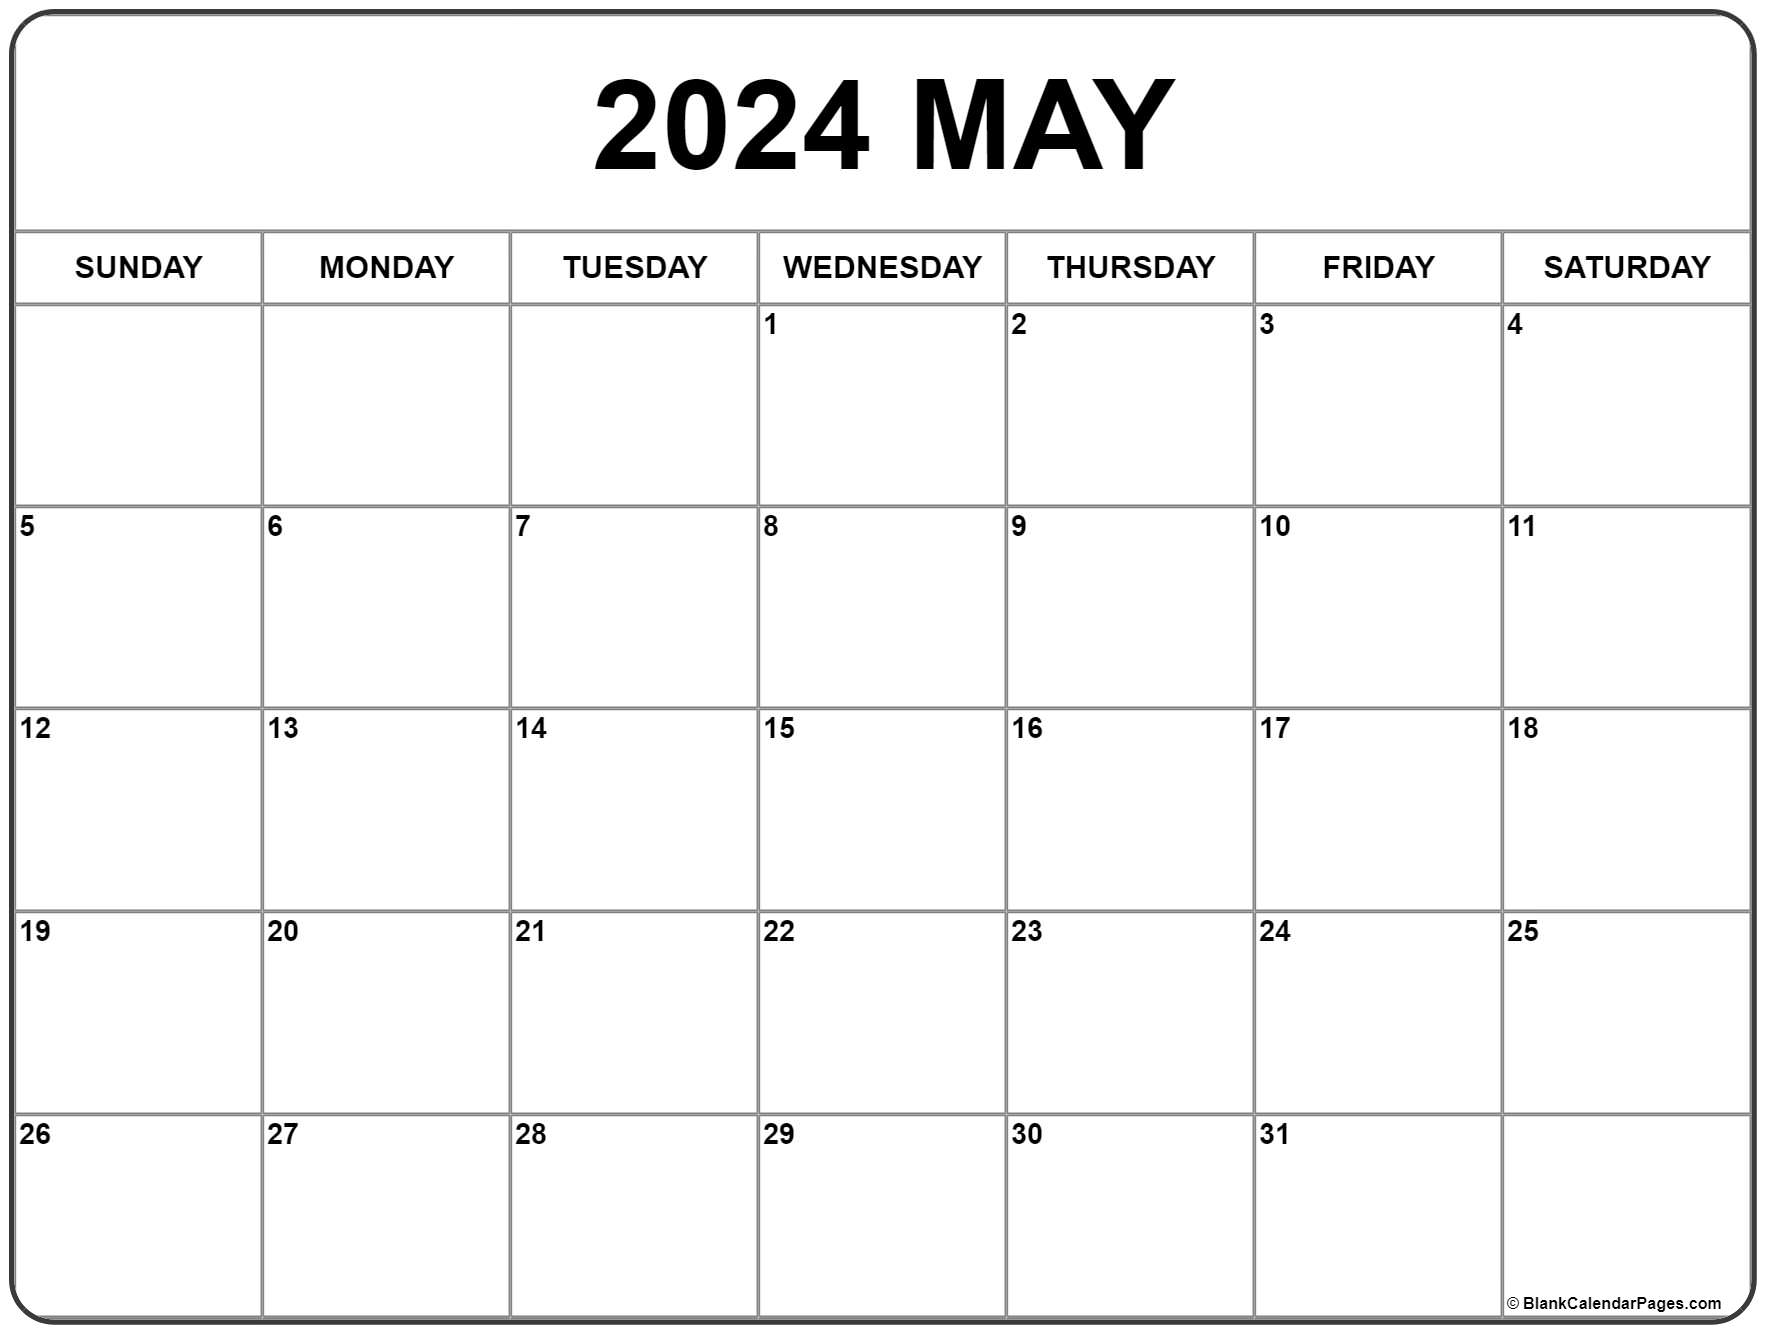 https://blankcalendarpages.com/printable_calendar/blank-18/May-2024-calendar-b18.jpg